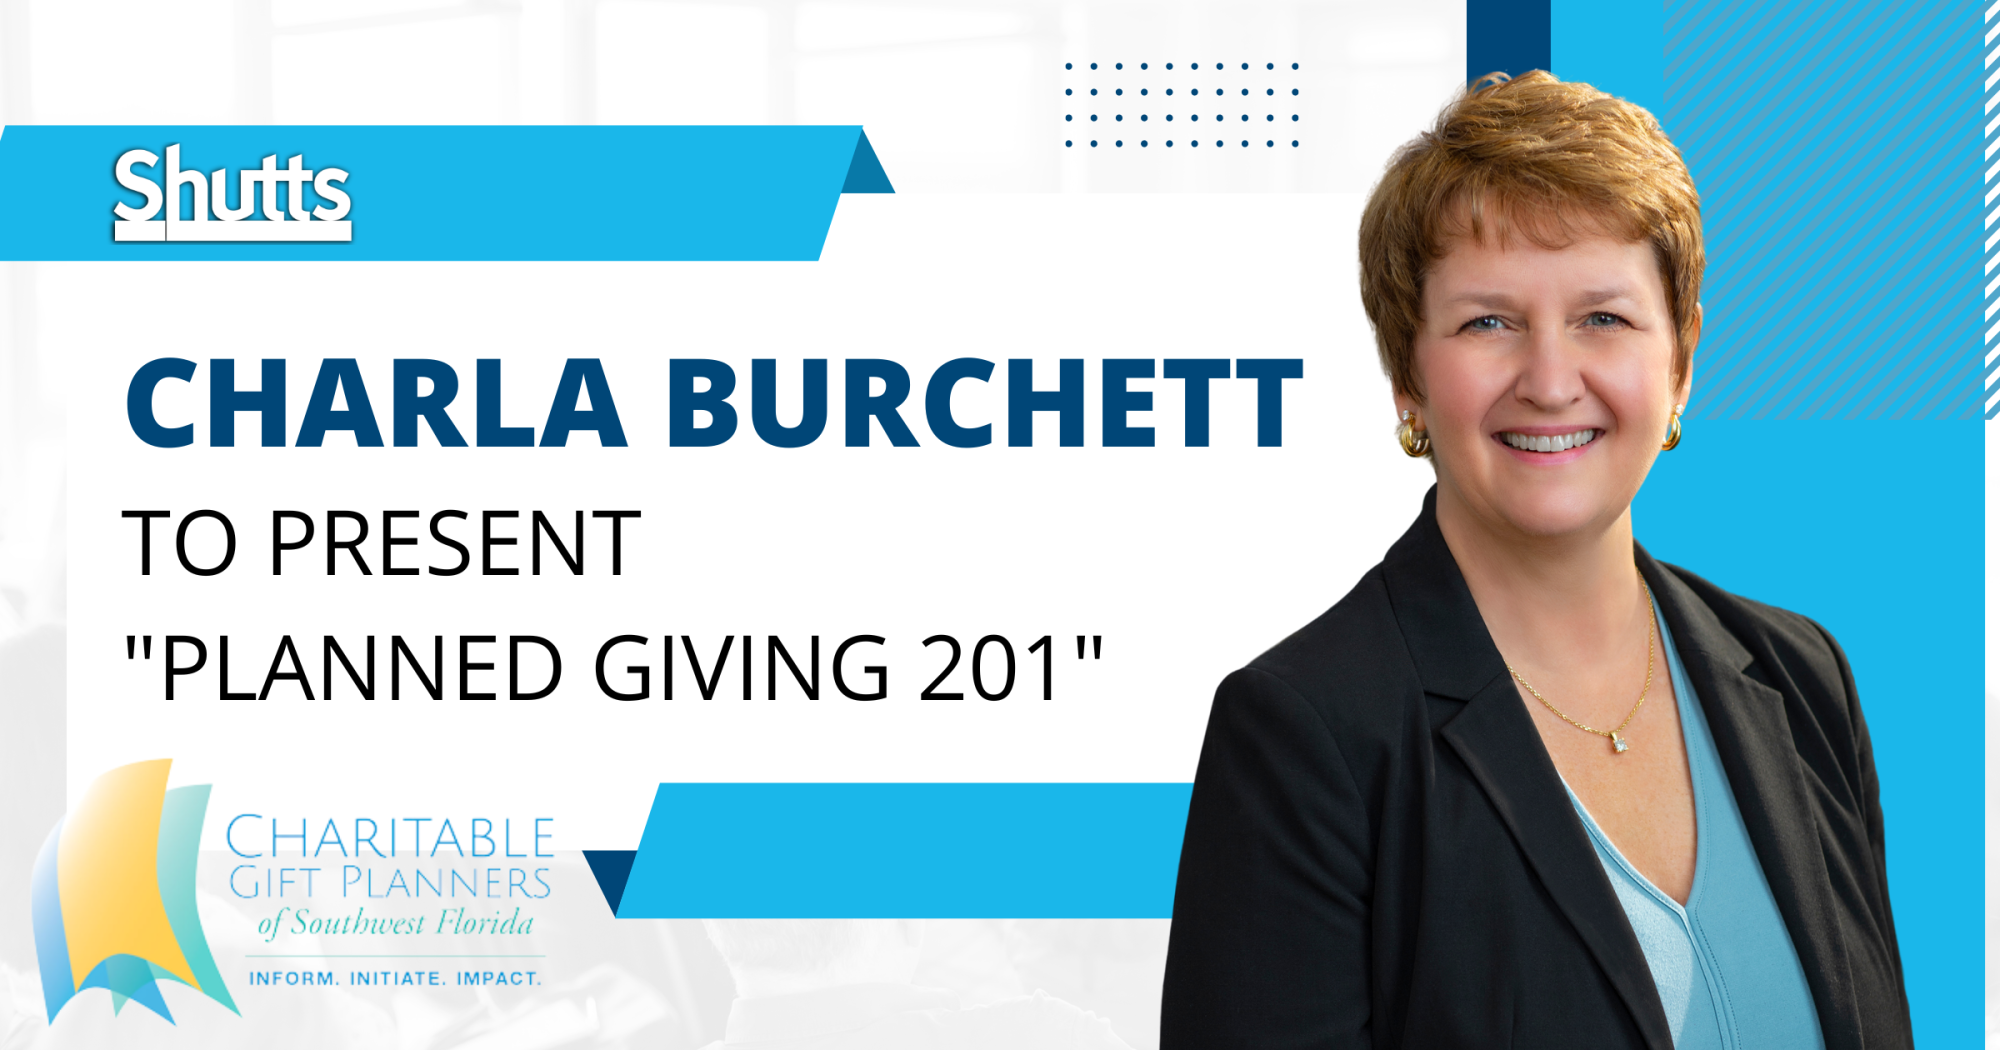 Charla Burchett to Present “Planned Giving 201”